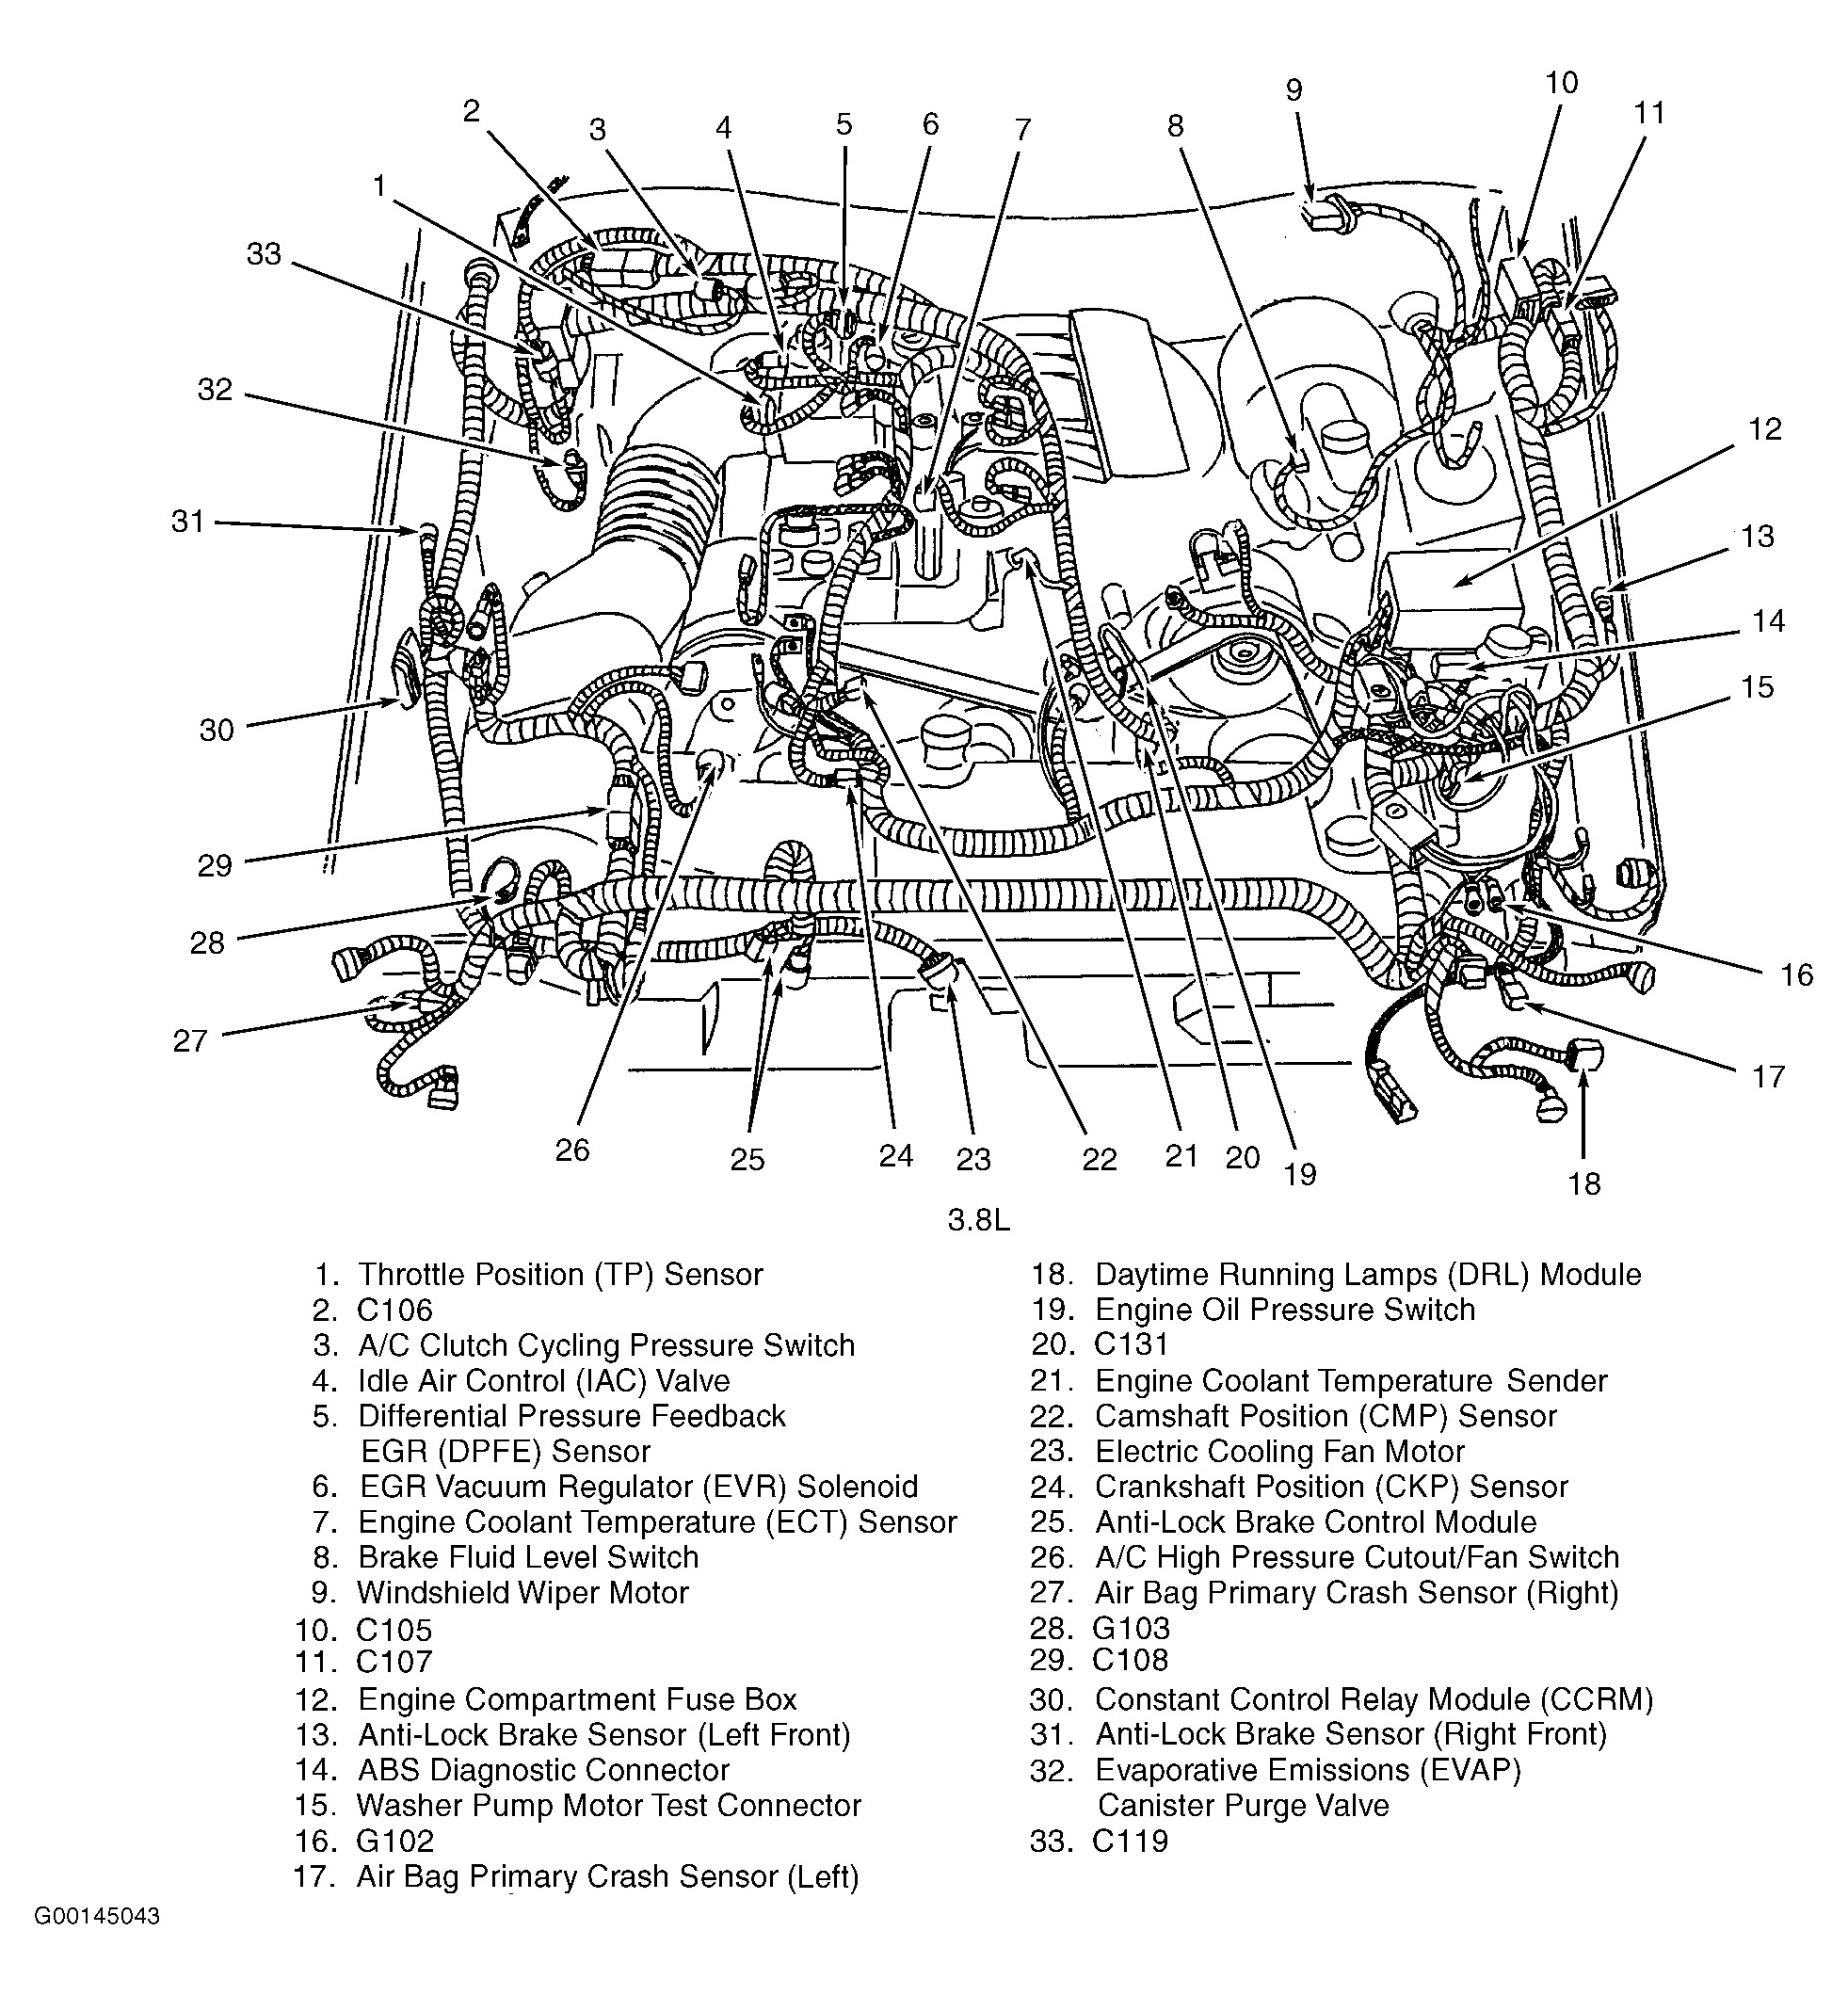 Ford 4 2 Liter V6 Engine Diagram ford V6 3 7 Engine Diagram ford Wiring Diagrams Instructions Of Ford 4 2 Liter V6 Engine Diagram